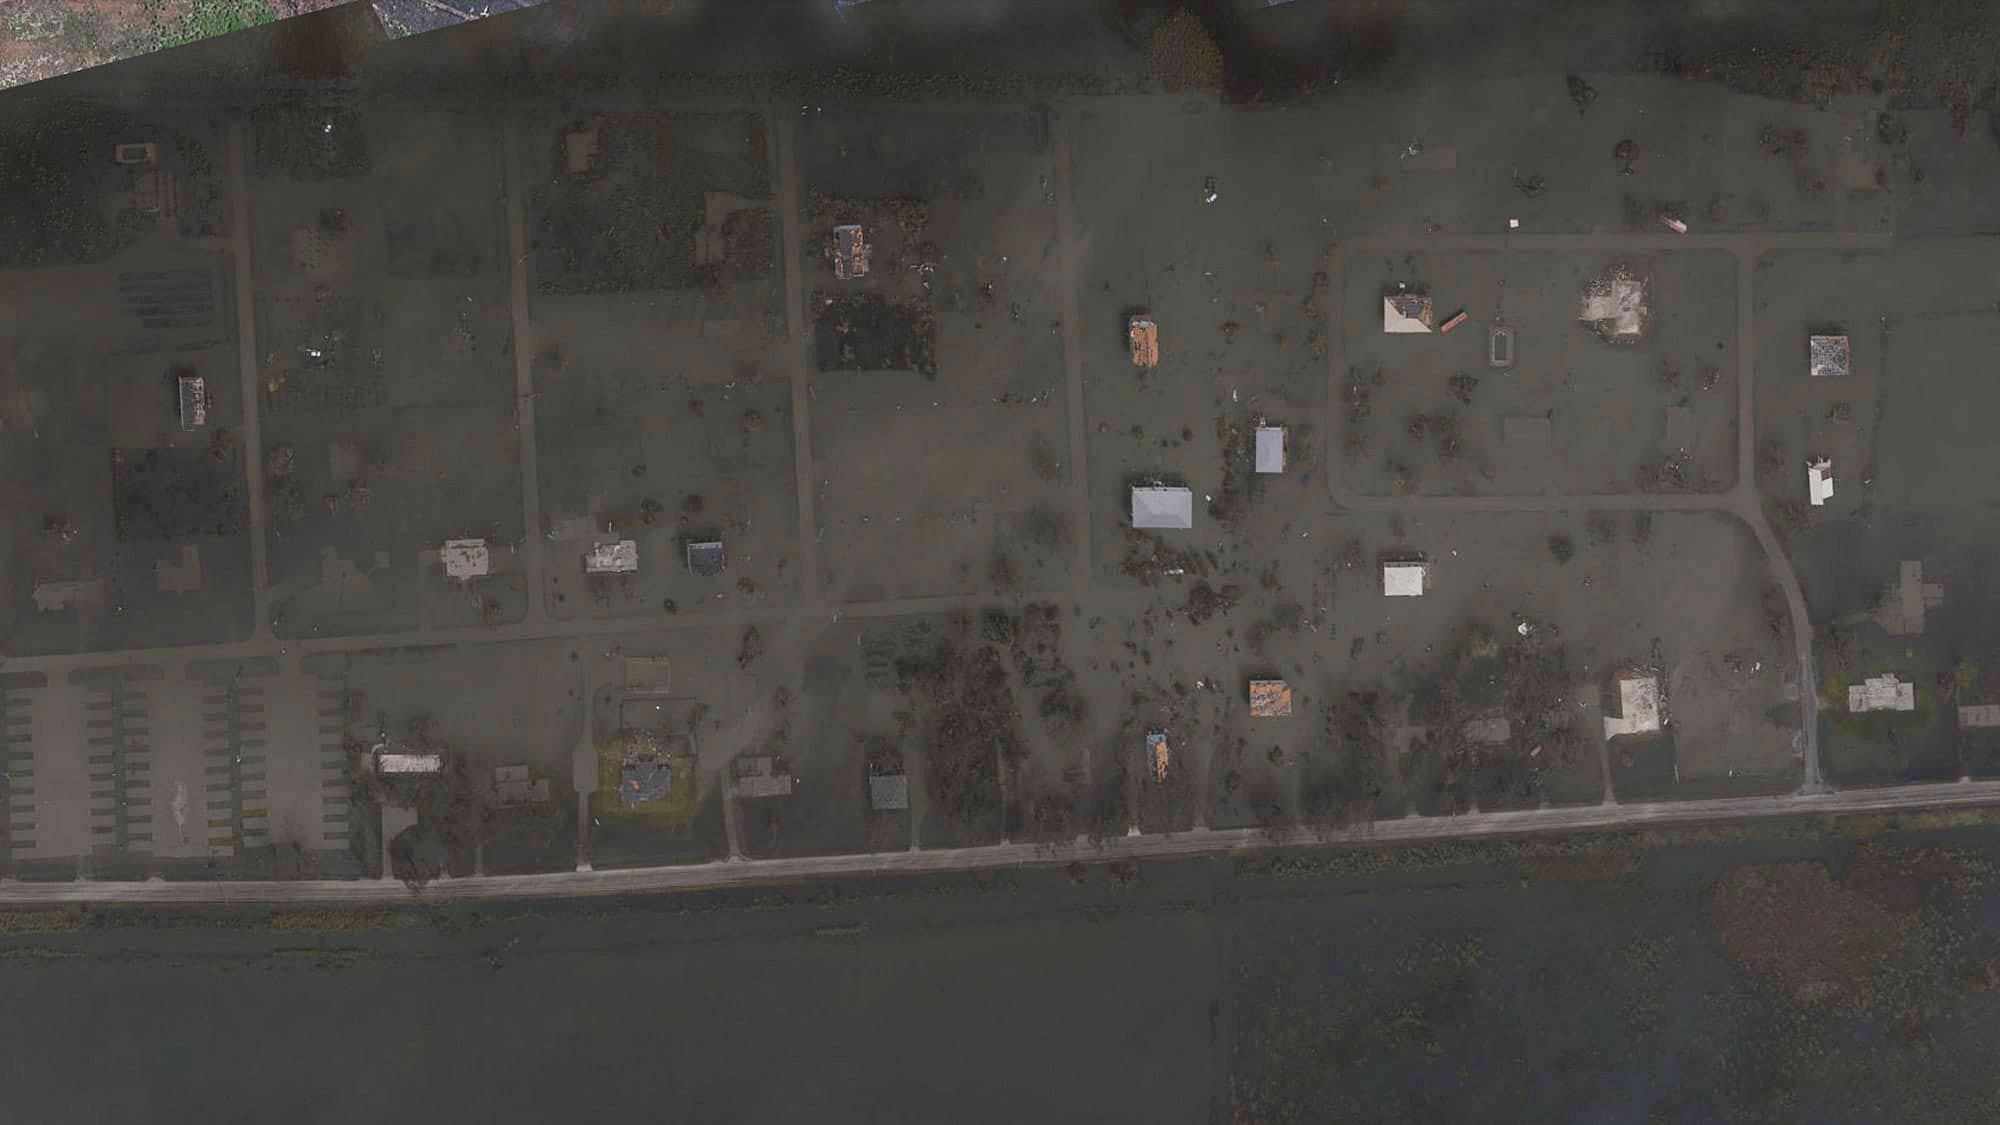 an image showing the area near Cameron, Louisiana before Laura